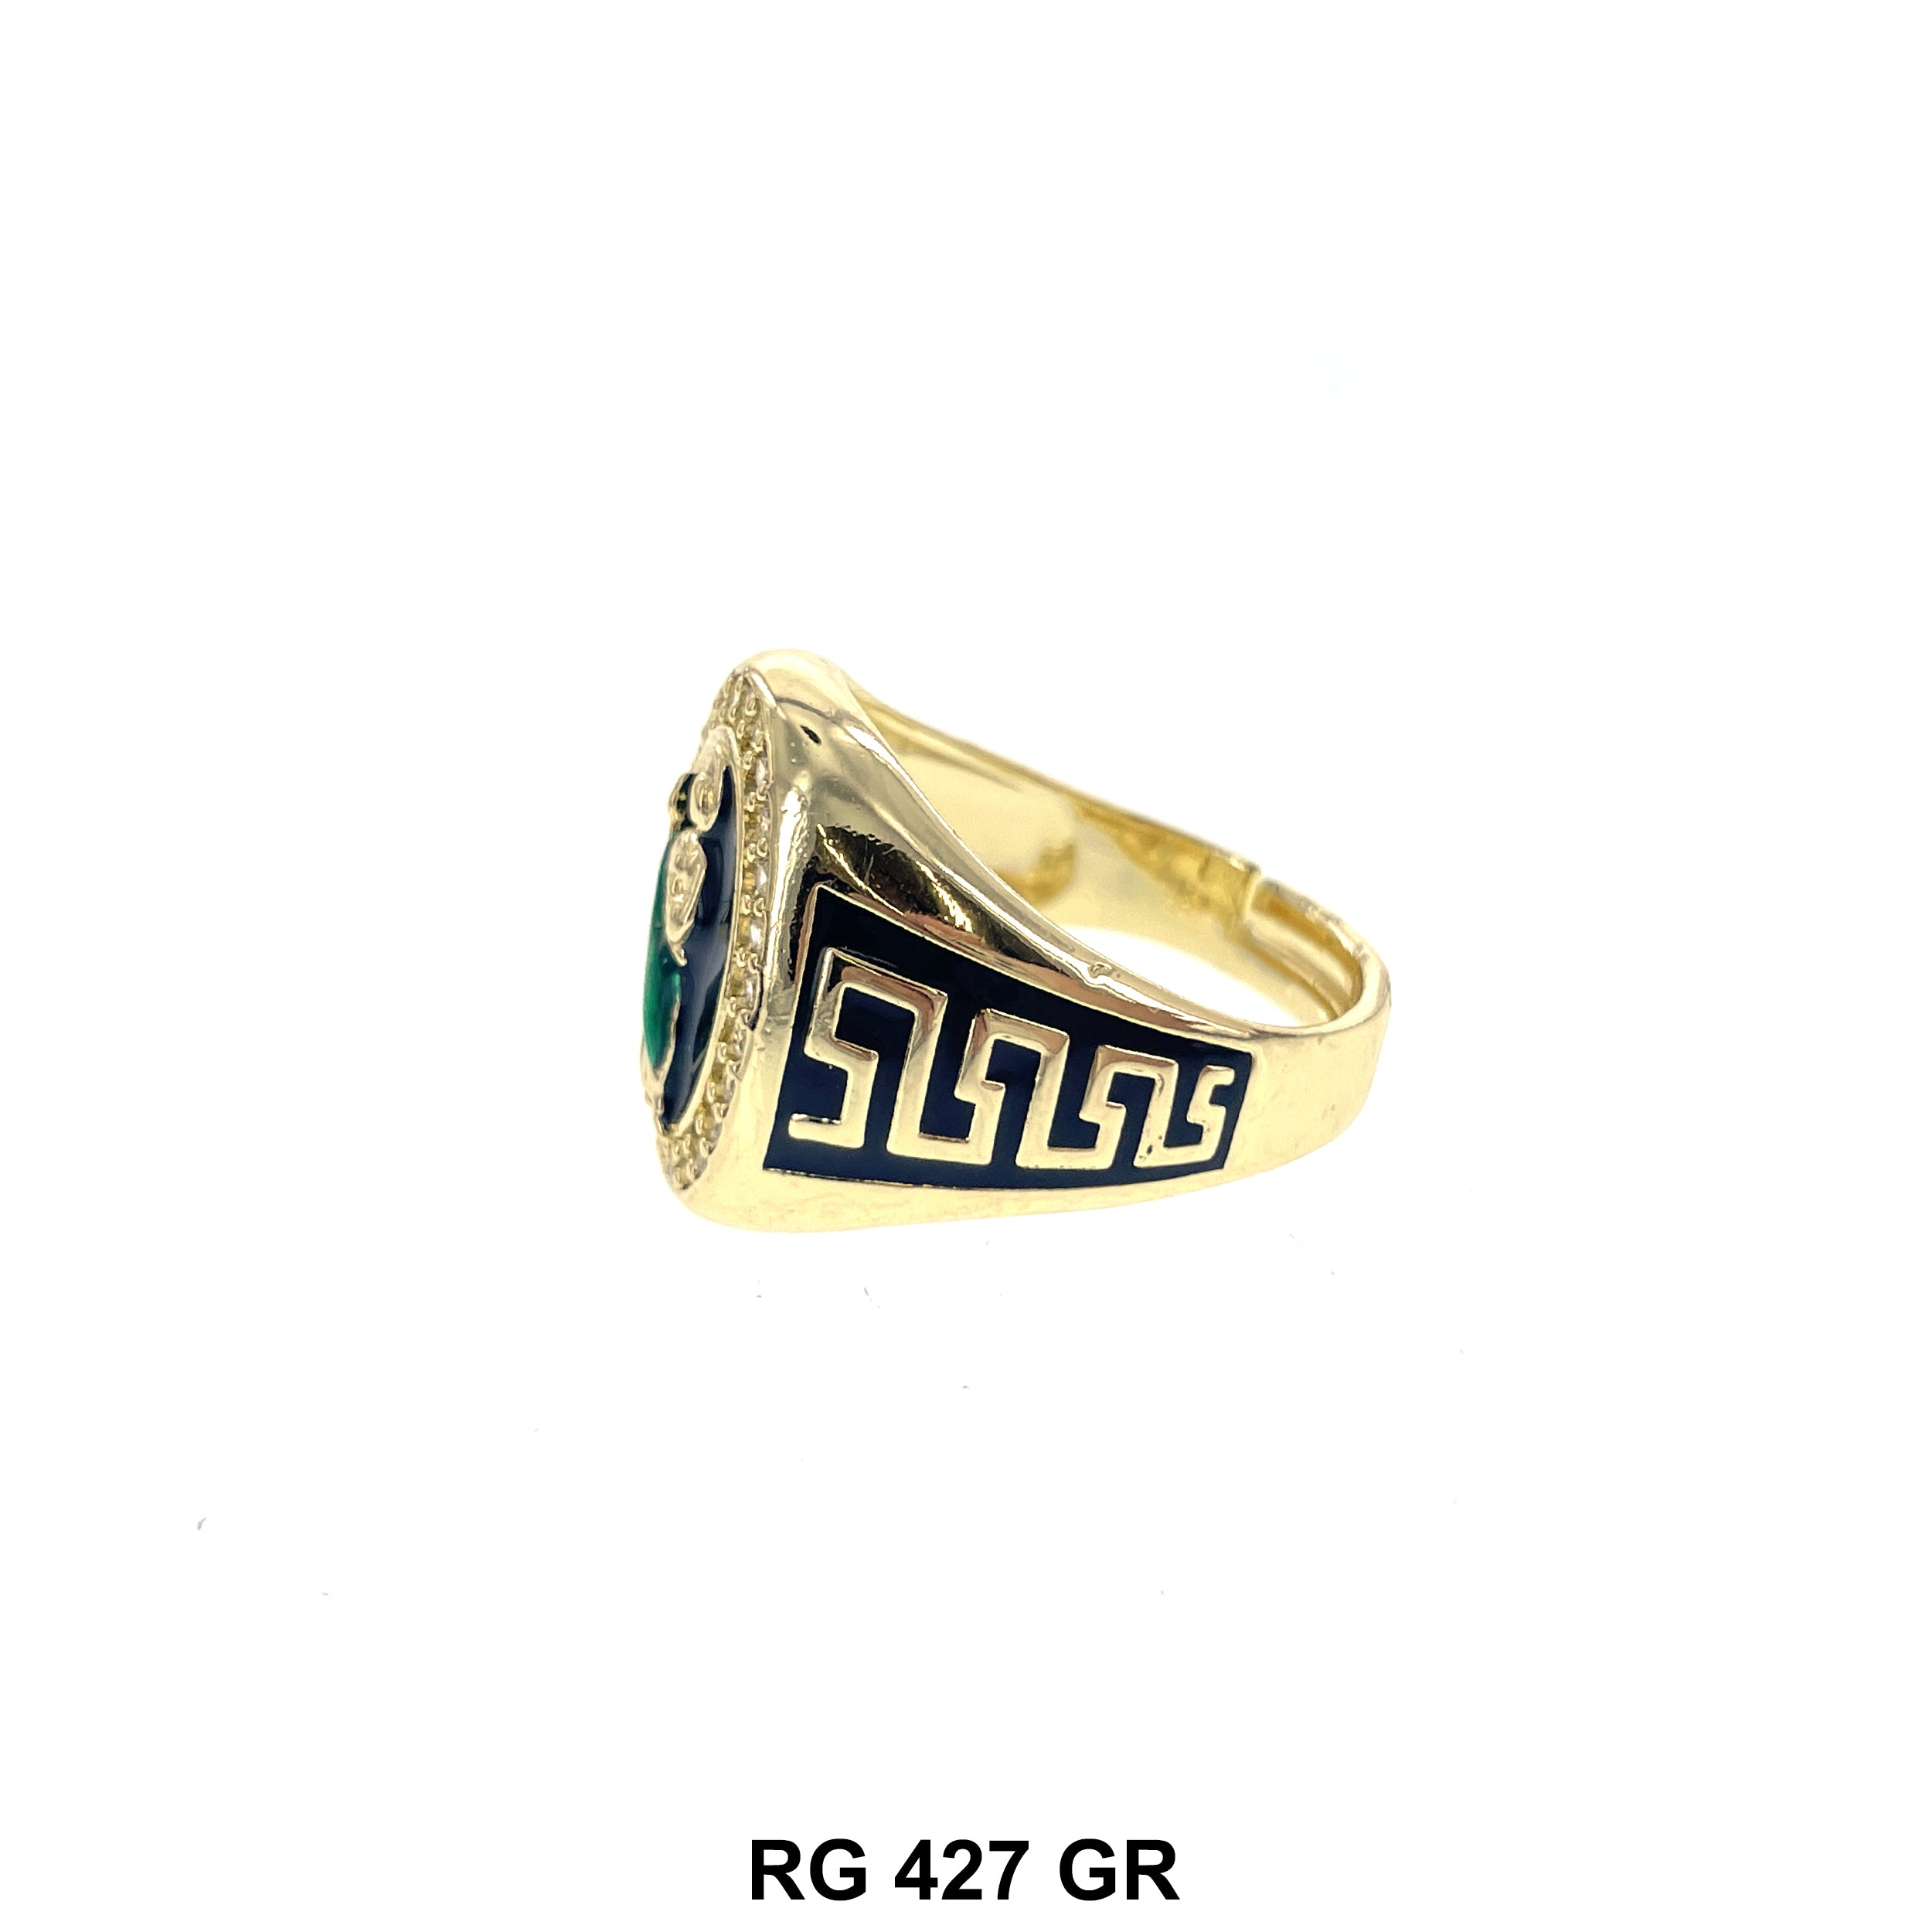 San Judas Adjustable Ring RG 427 GR